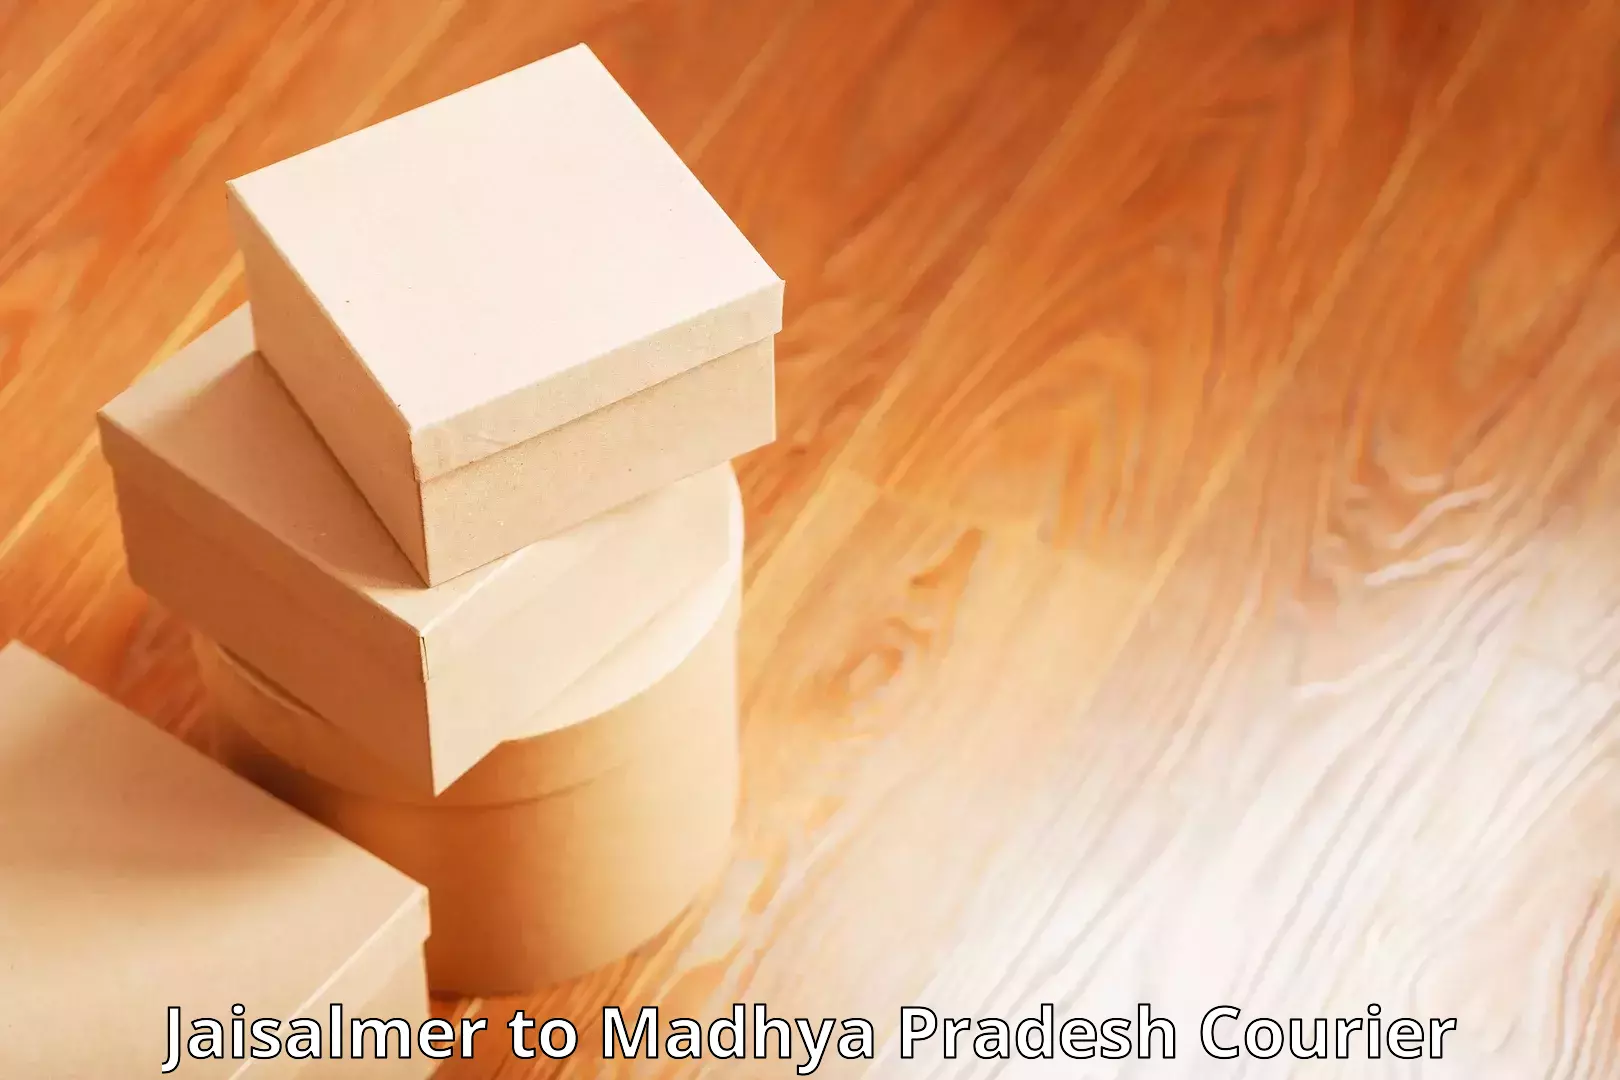 Cash on delivery service Jaisalmer to Madhya Pradesh